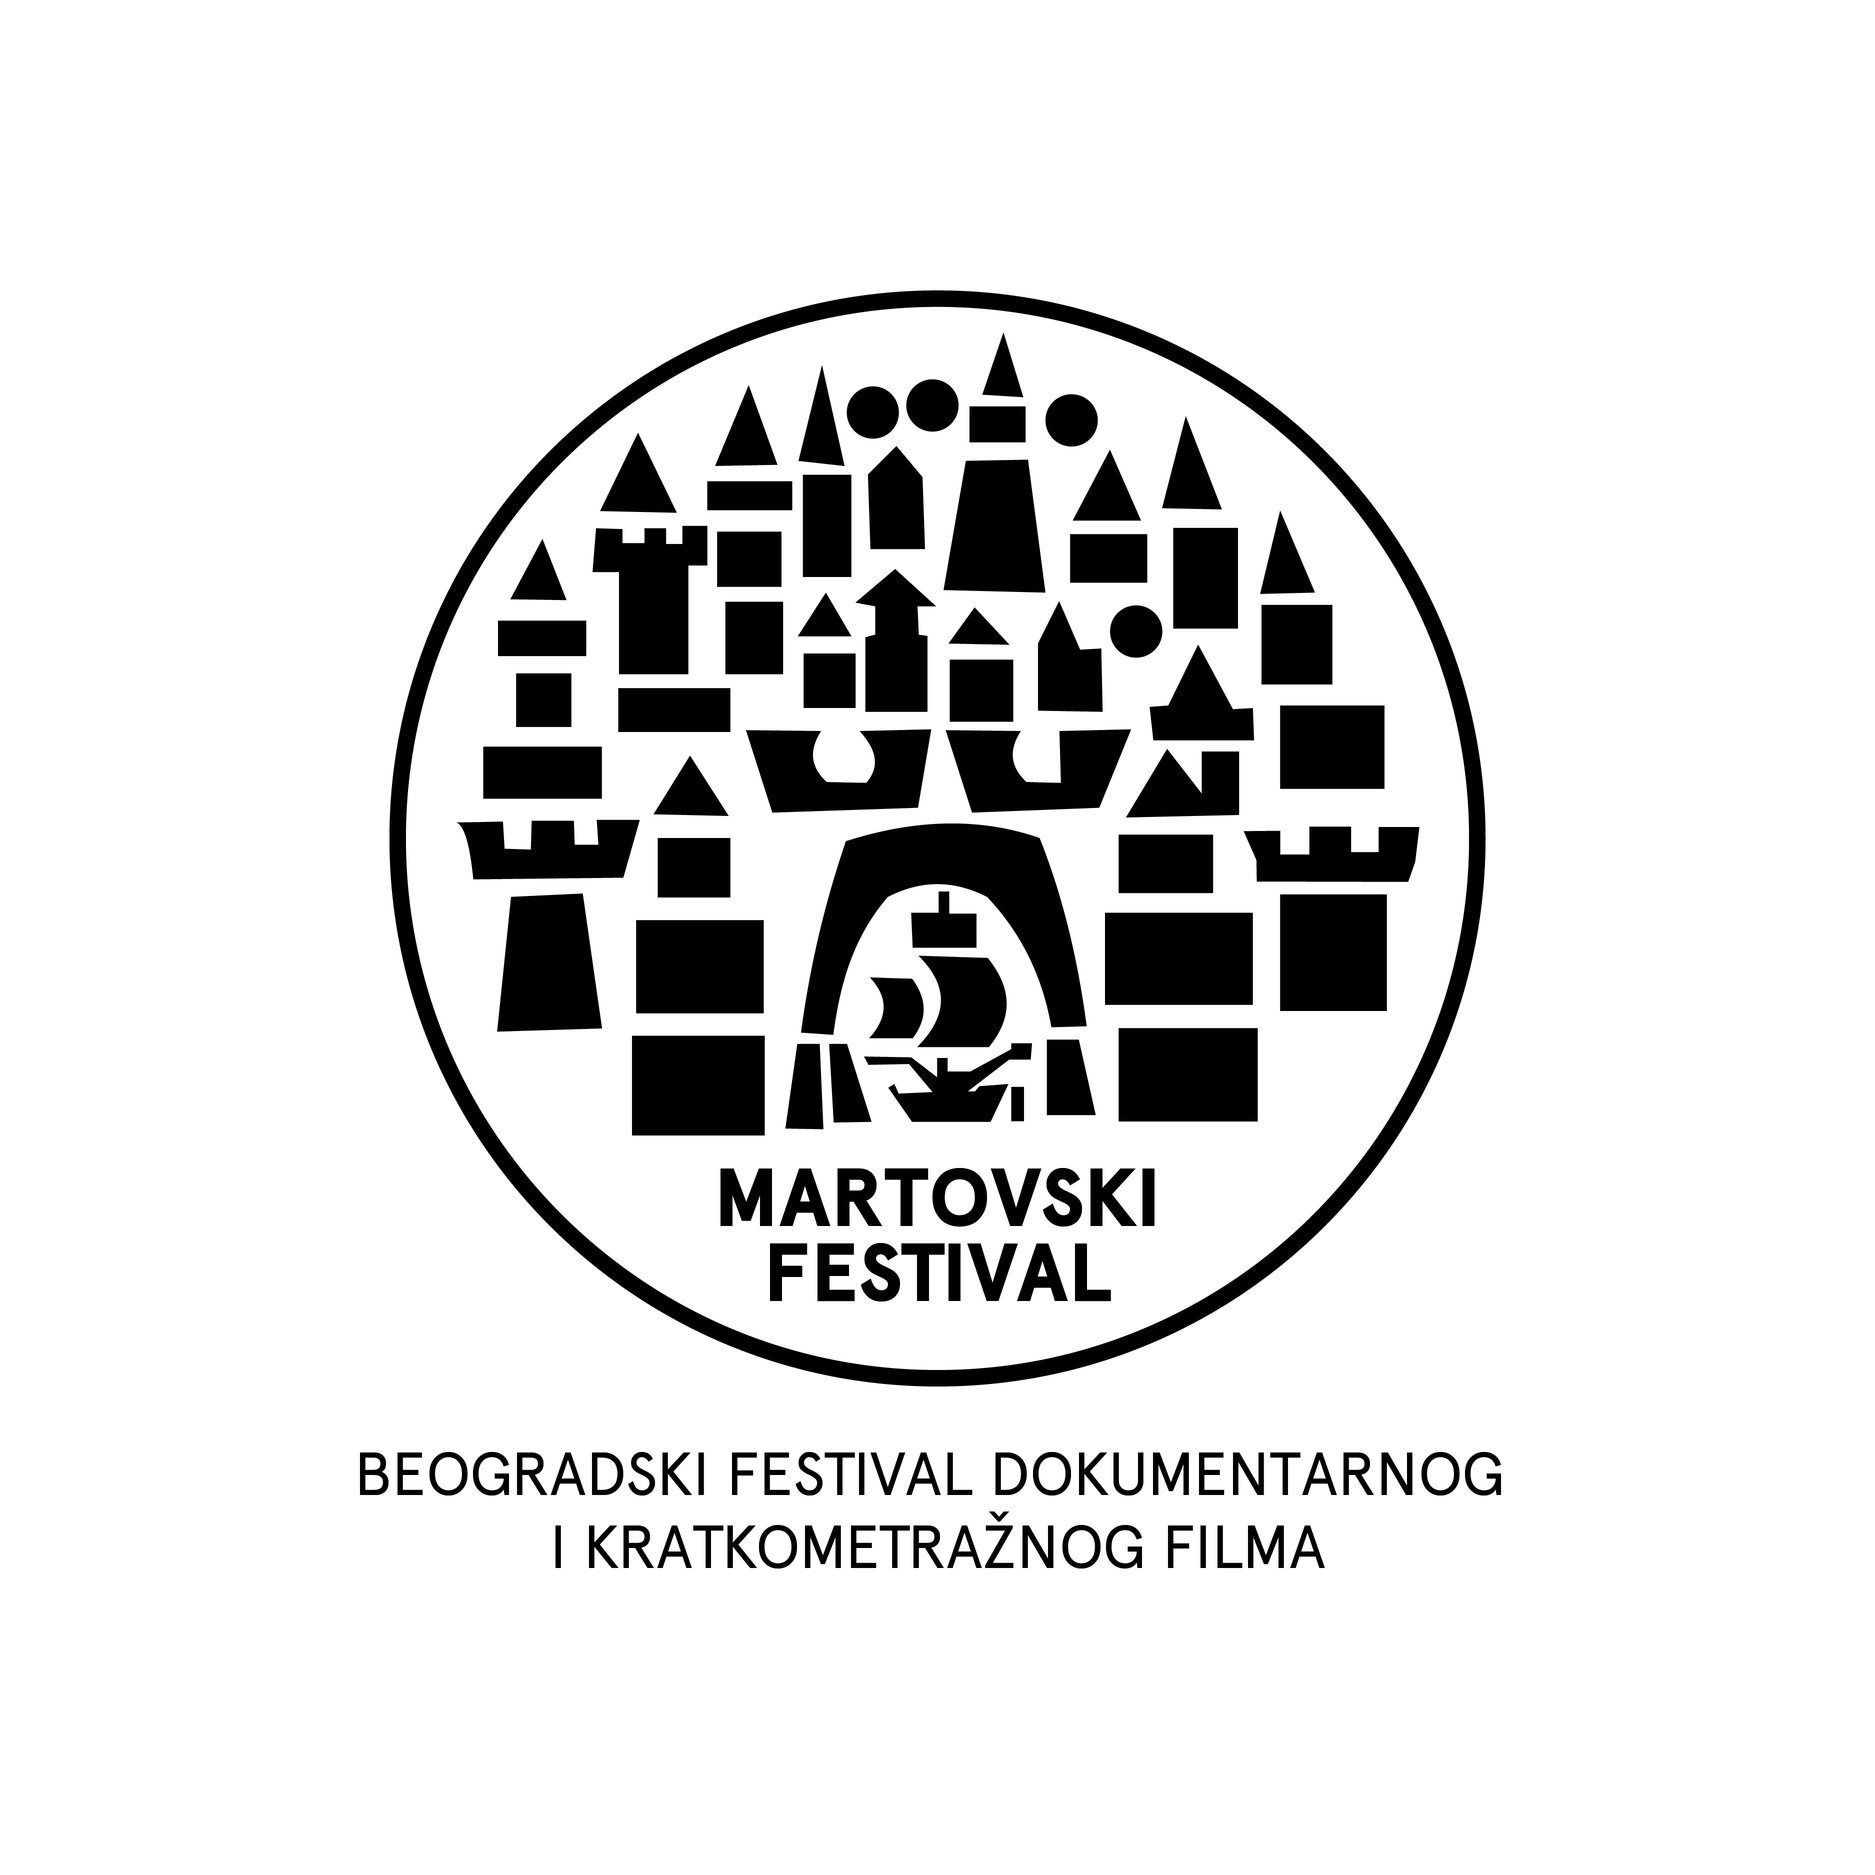 Otvoren konkurs za prijave filmova na 64. MARTOVSKI FESTIVAL